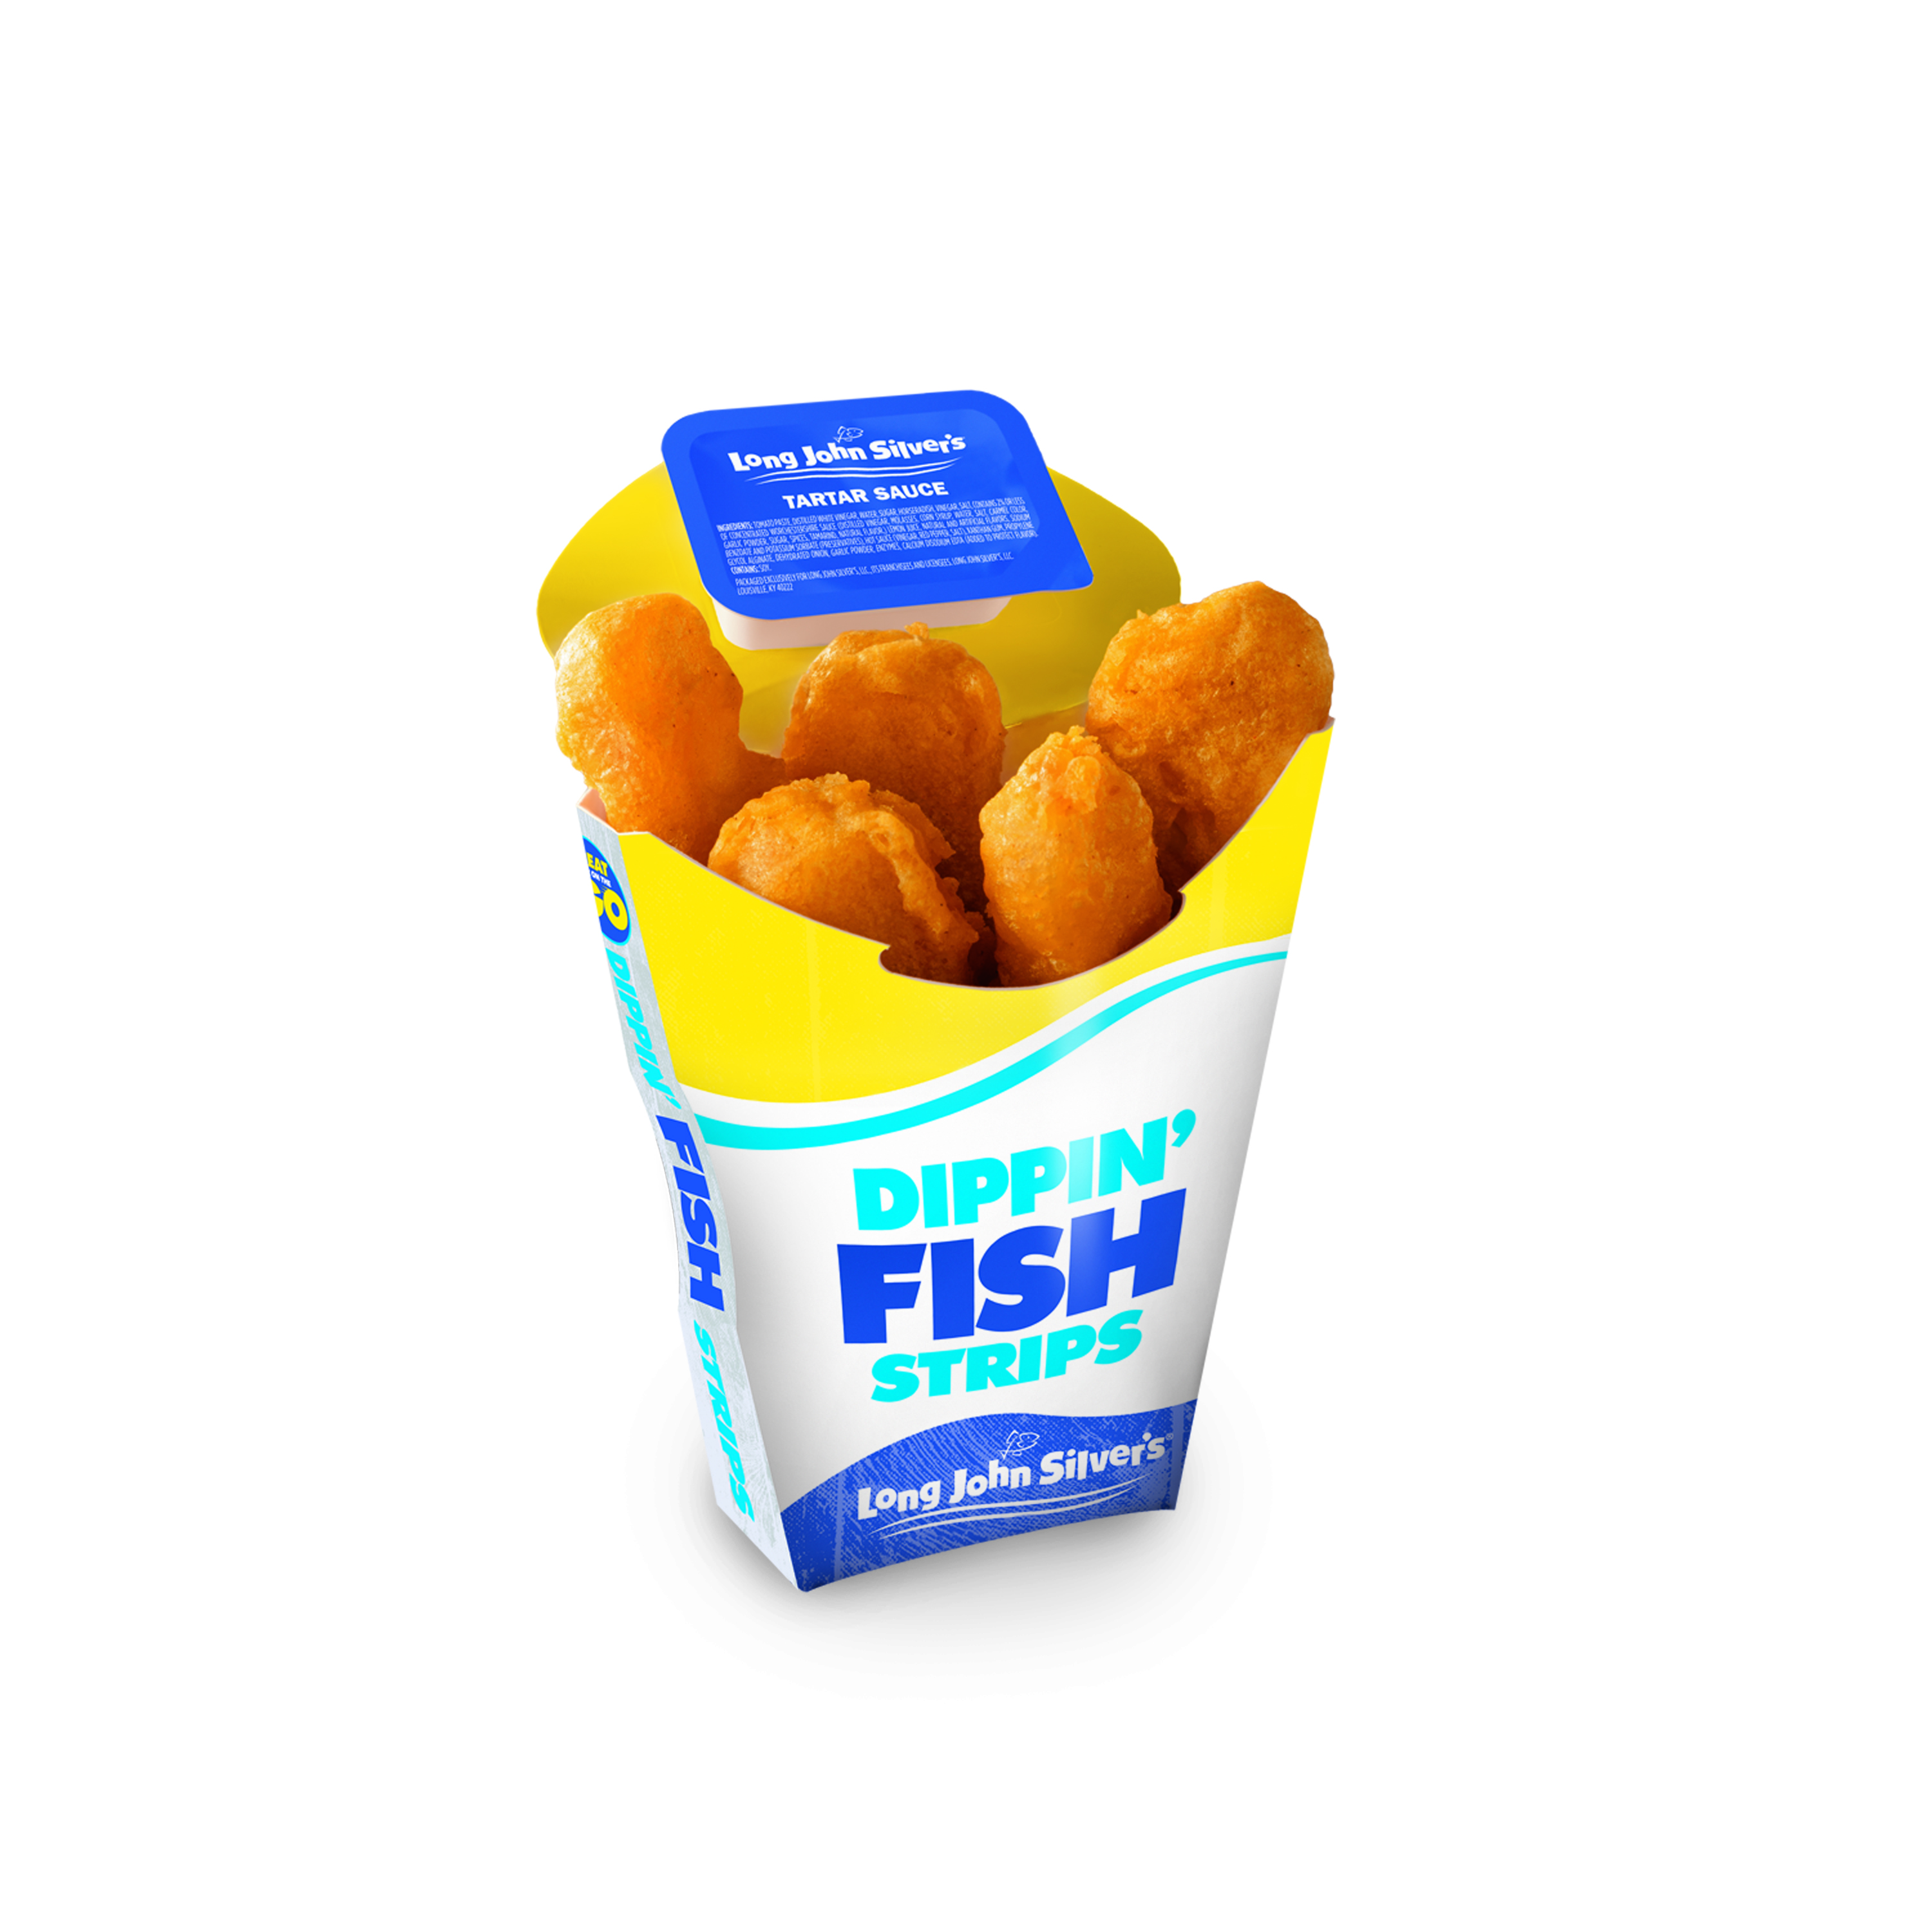 Long John Silver's Dippin' Fish Strips Snack Box